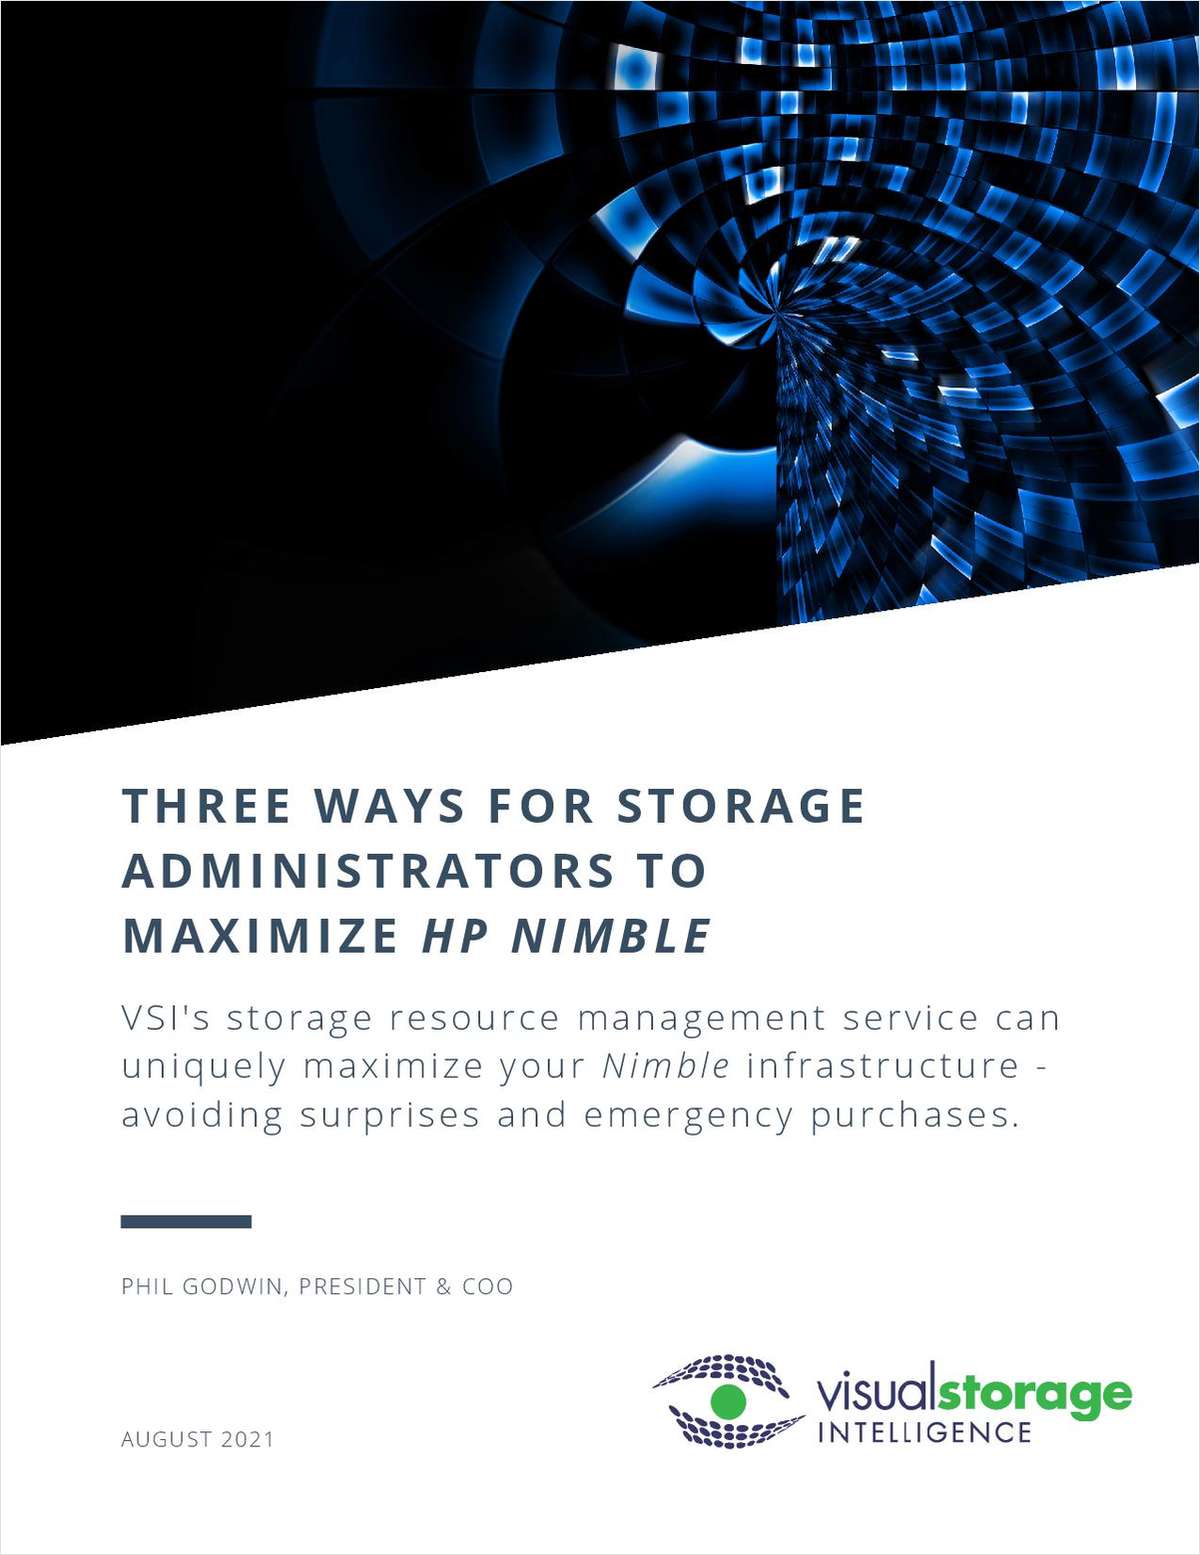 3 Ways for IT Storage Teams to Maximize HP Nimble